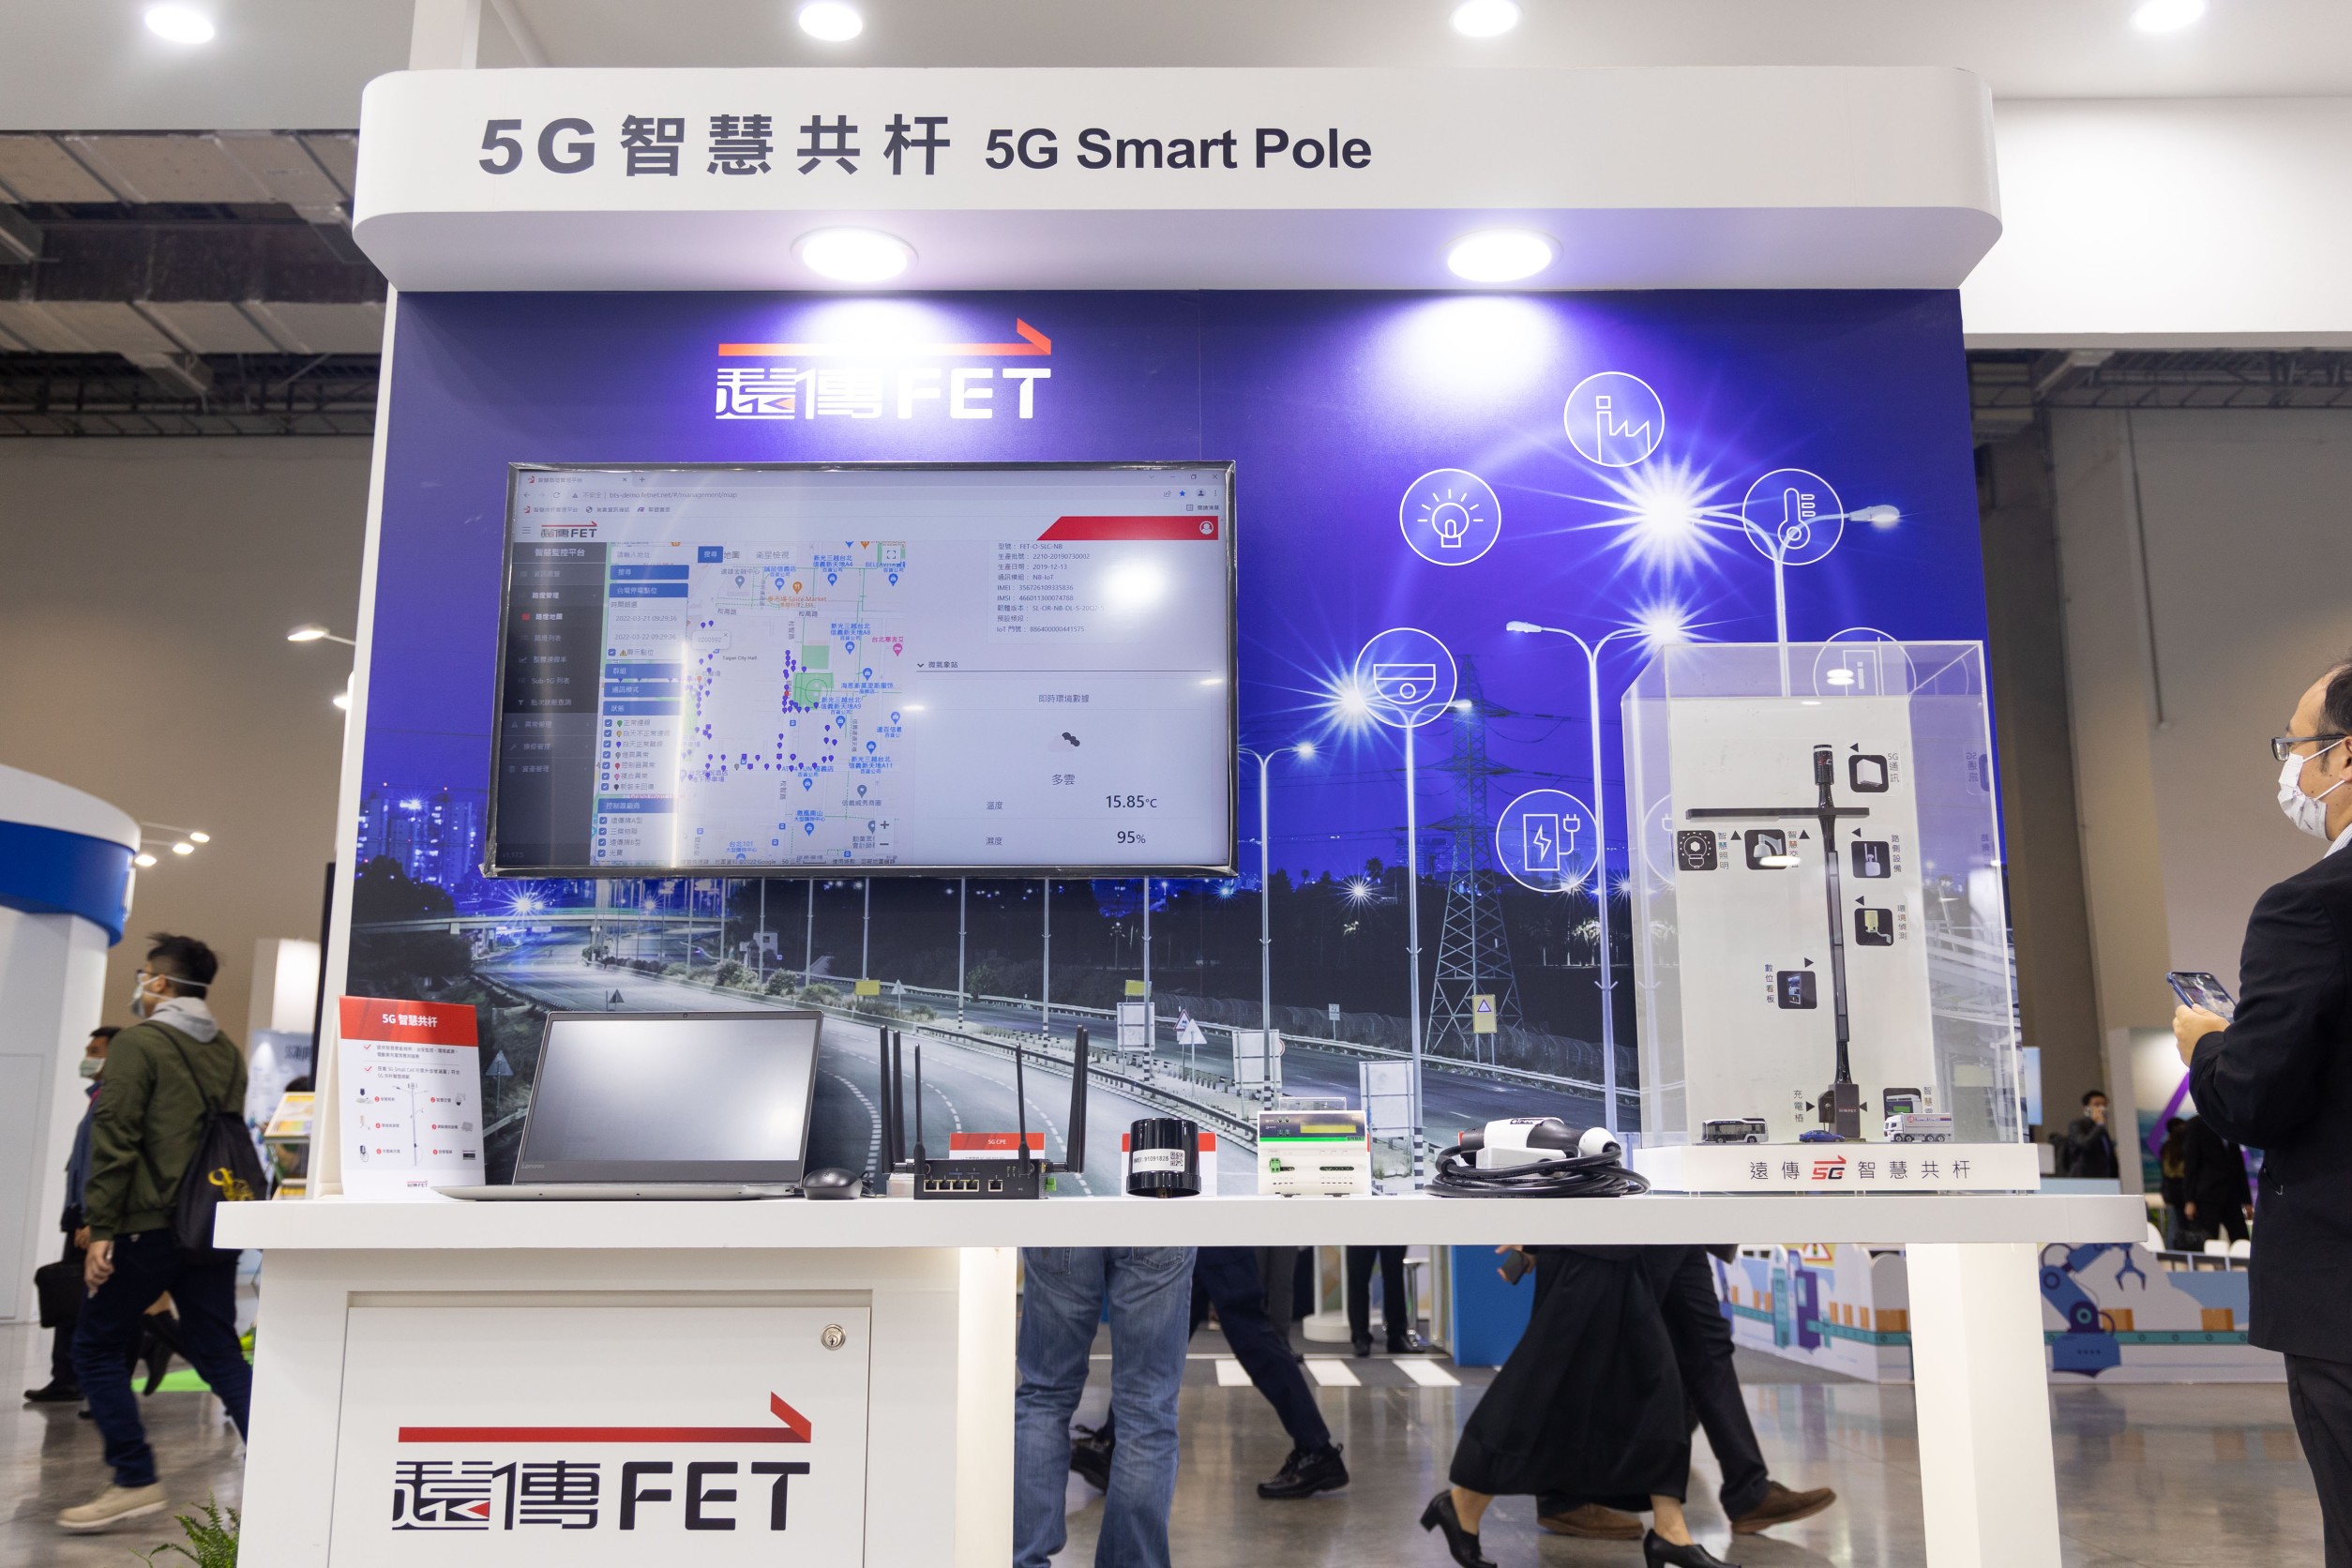 Smart Streetlights and 5G Smart Poles